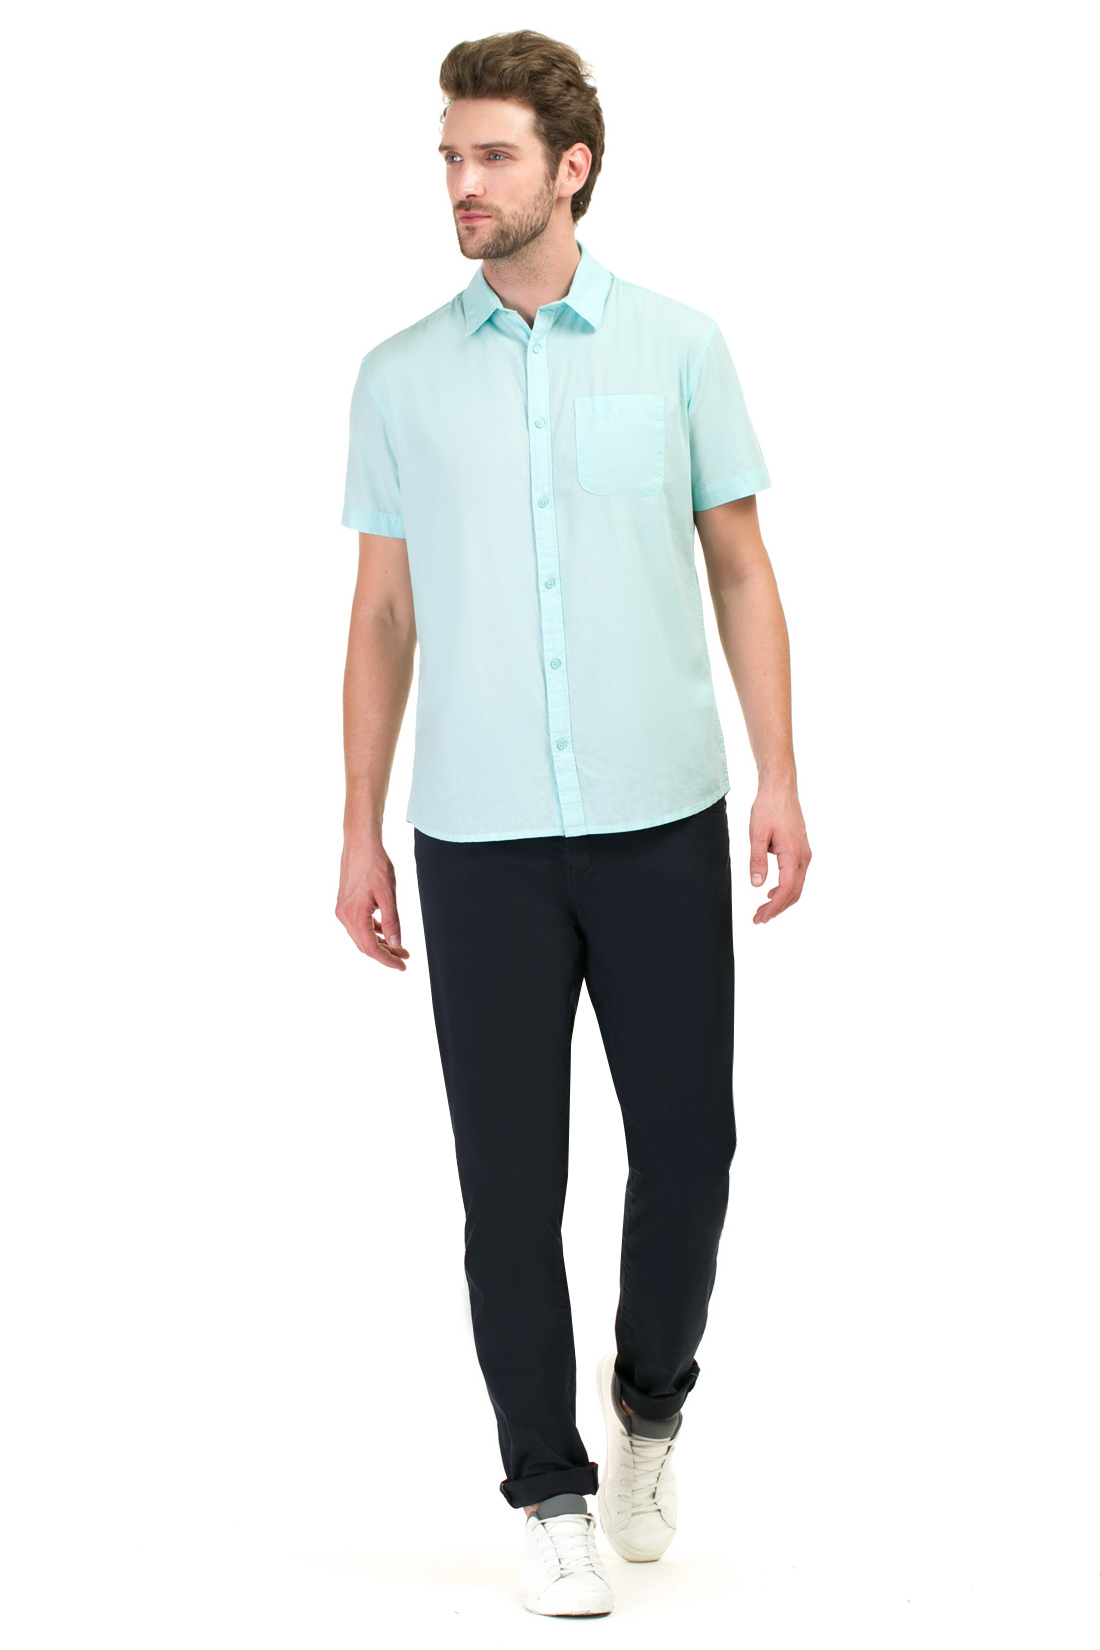 Базовая рубашка с коротким рукавом (арт. baon B687025), размер M, цвет голубой Базовая рубашка с коротким рукавом (арт. baon B687025) - фото 5